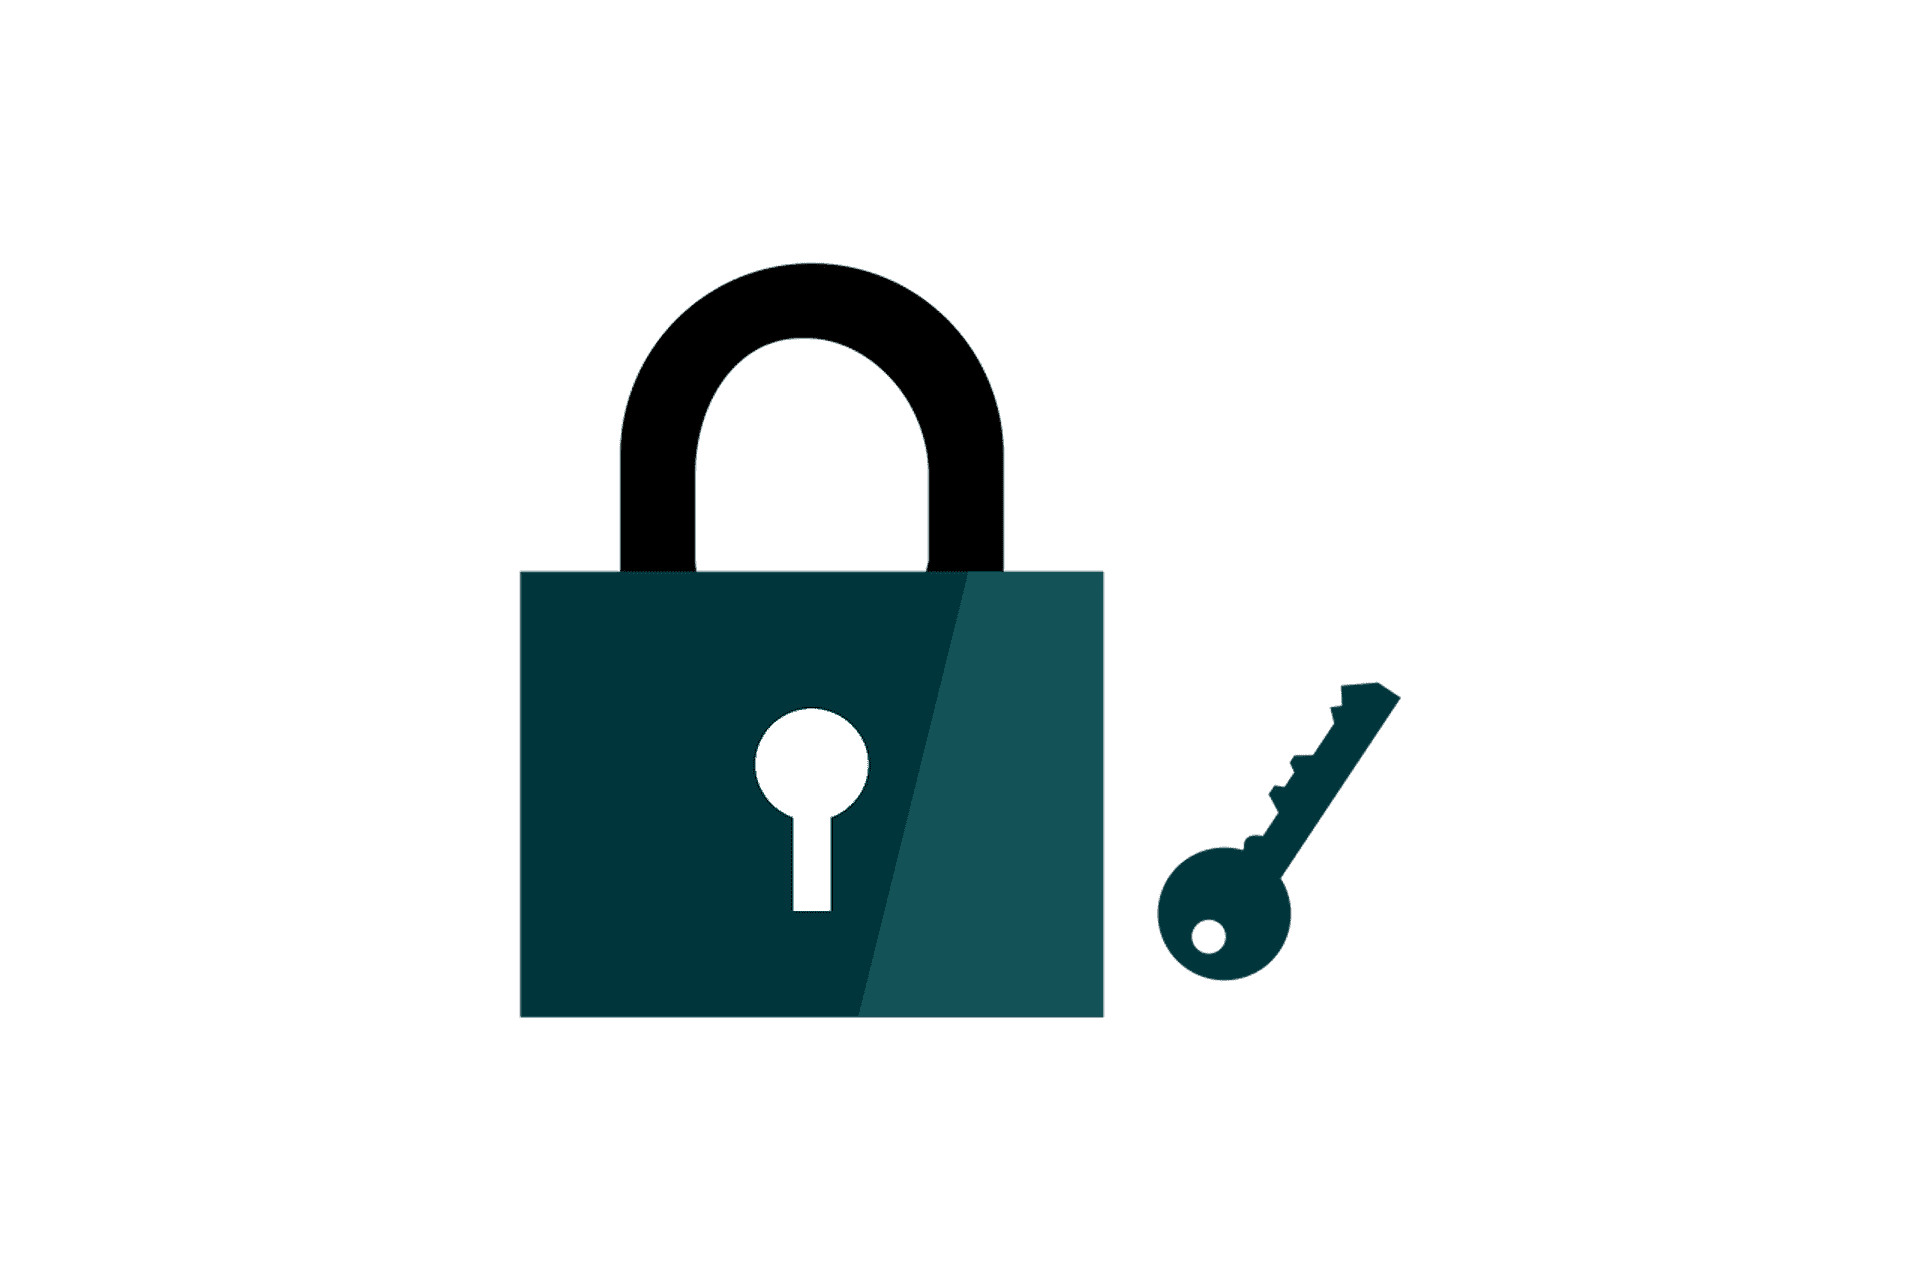 A padlock and key